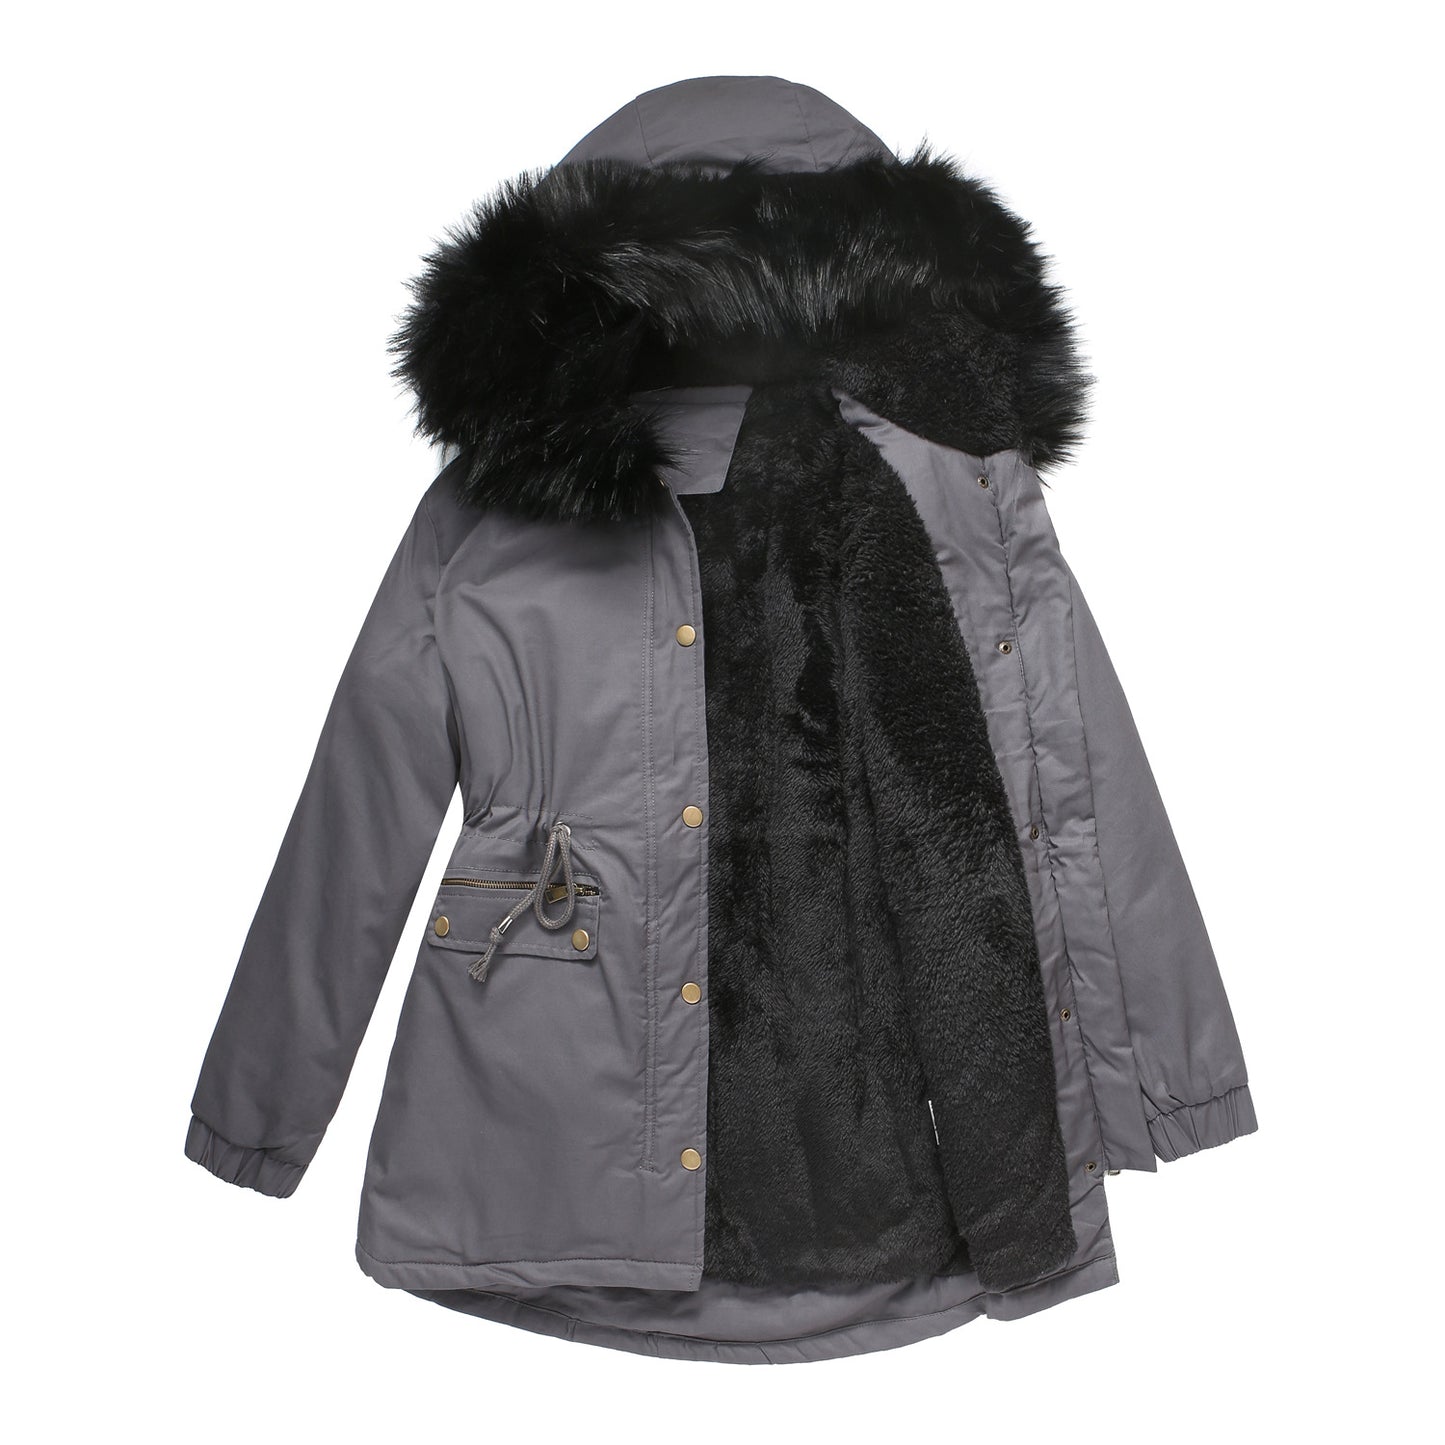 Fleece Lined Parka Coat with Fur Trims